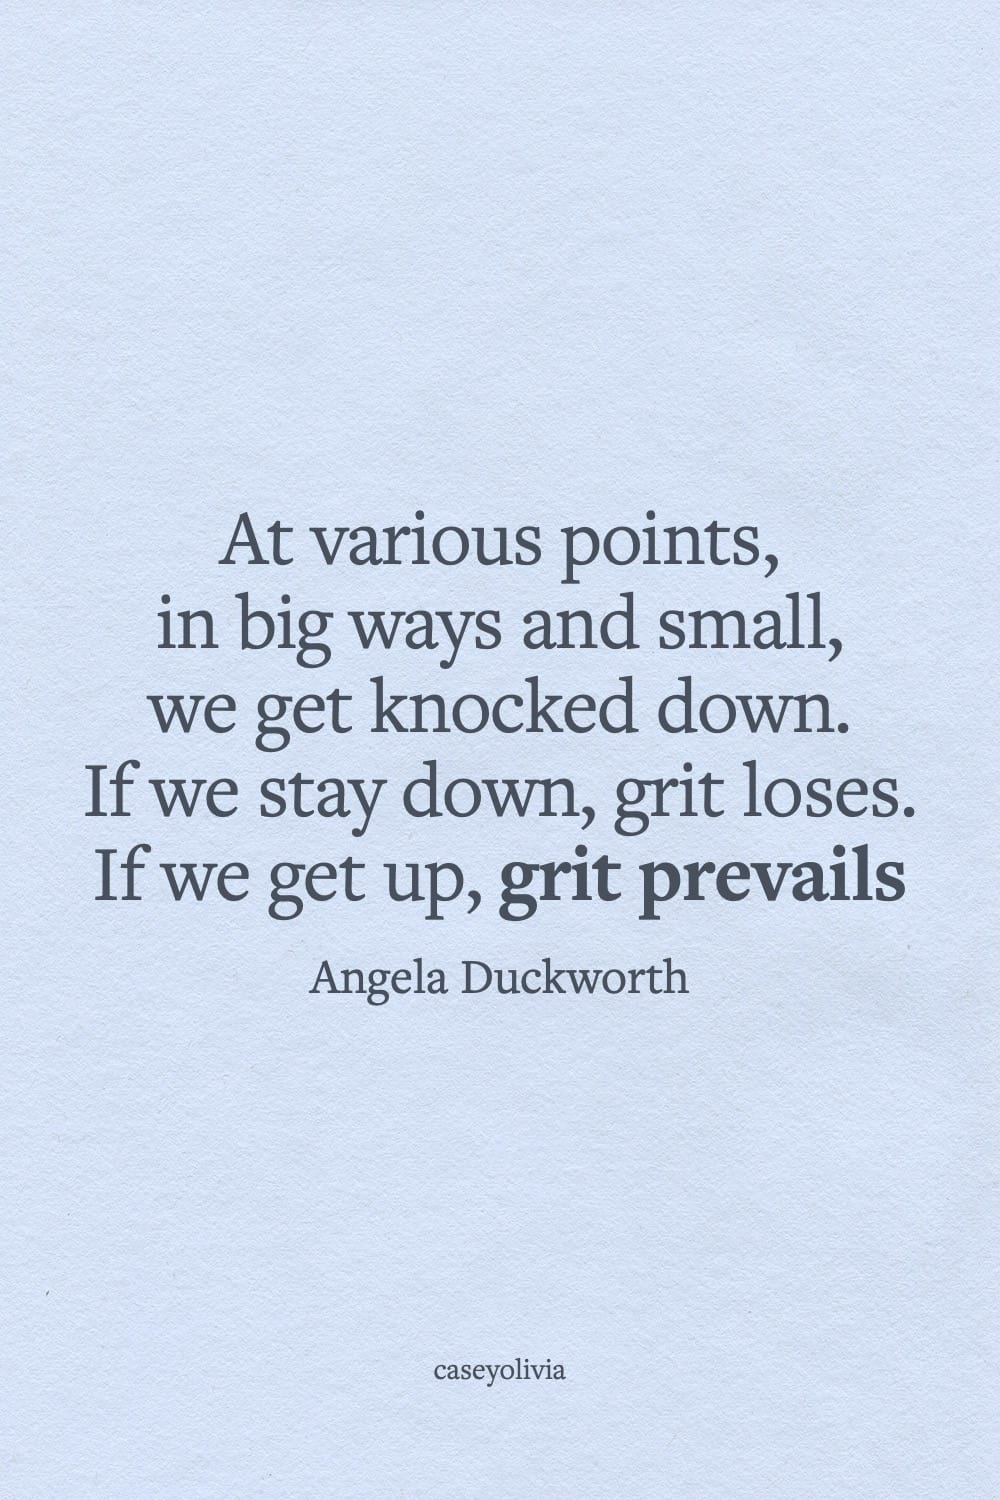 grit prevails angela duckworth quotation